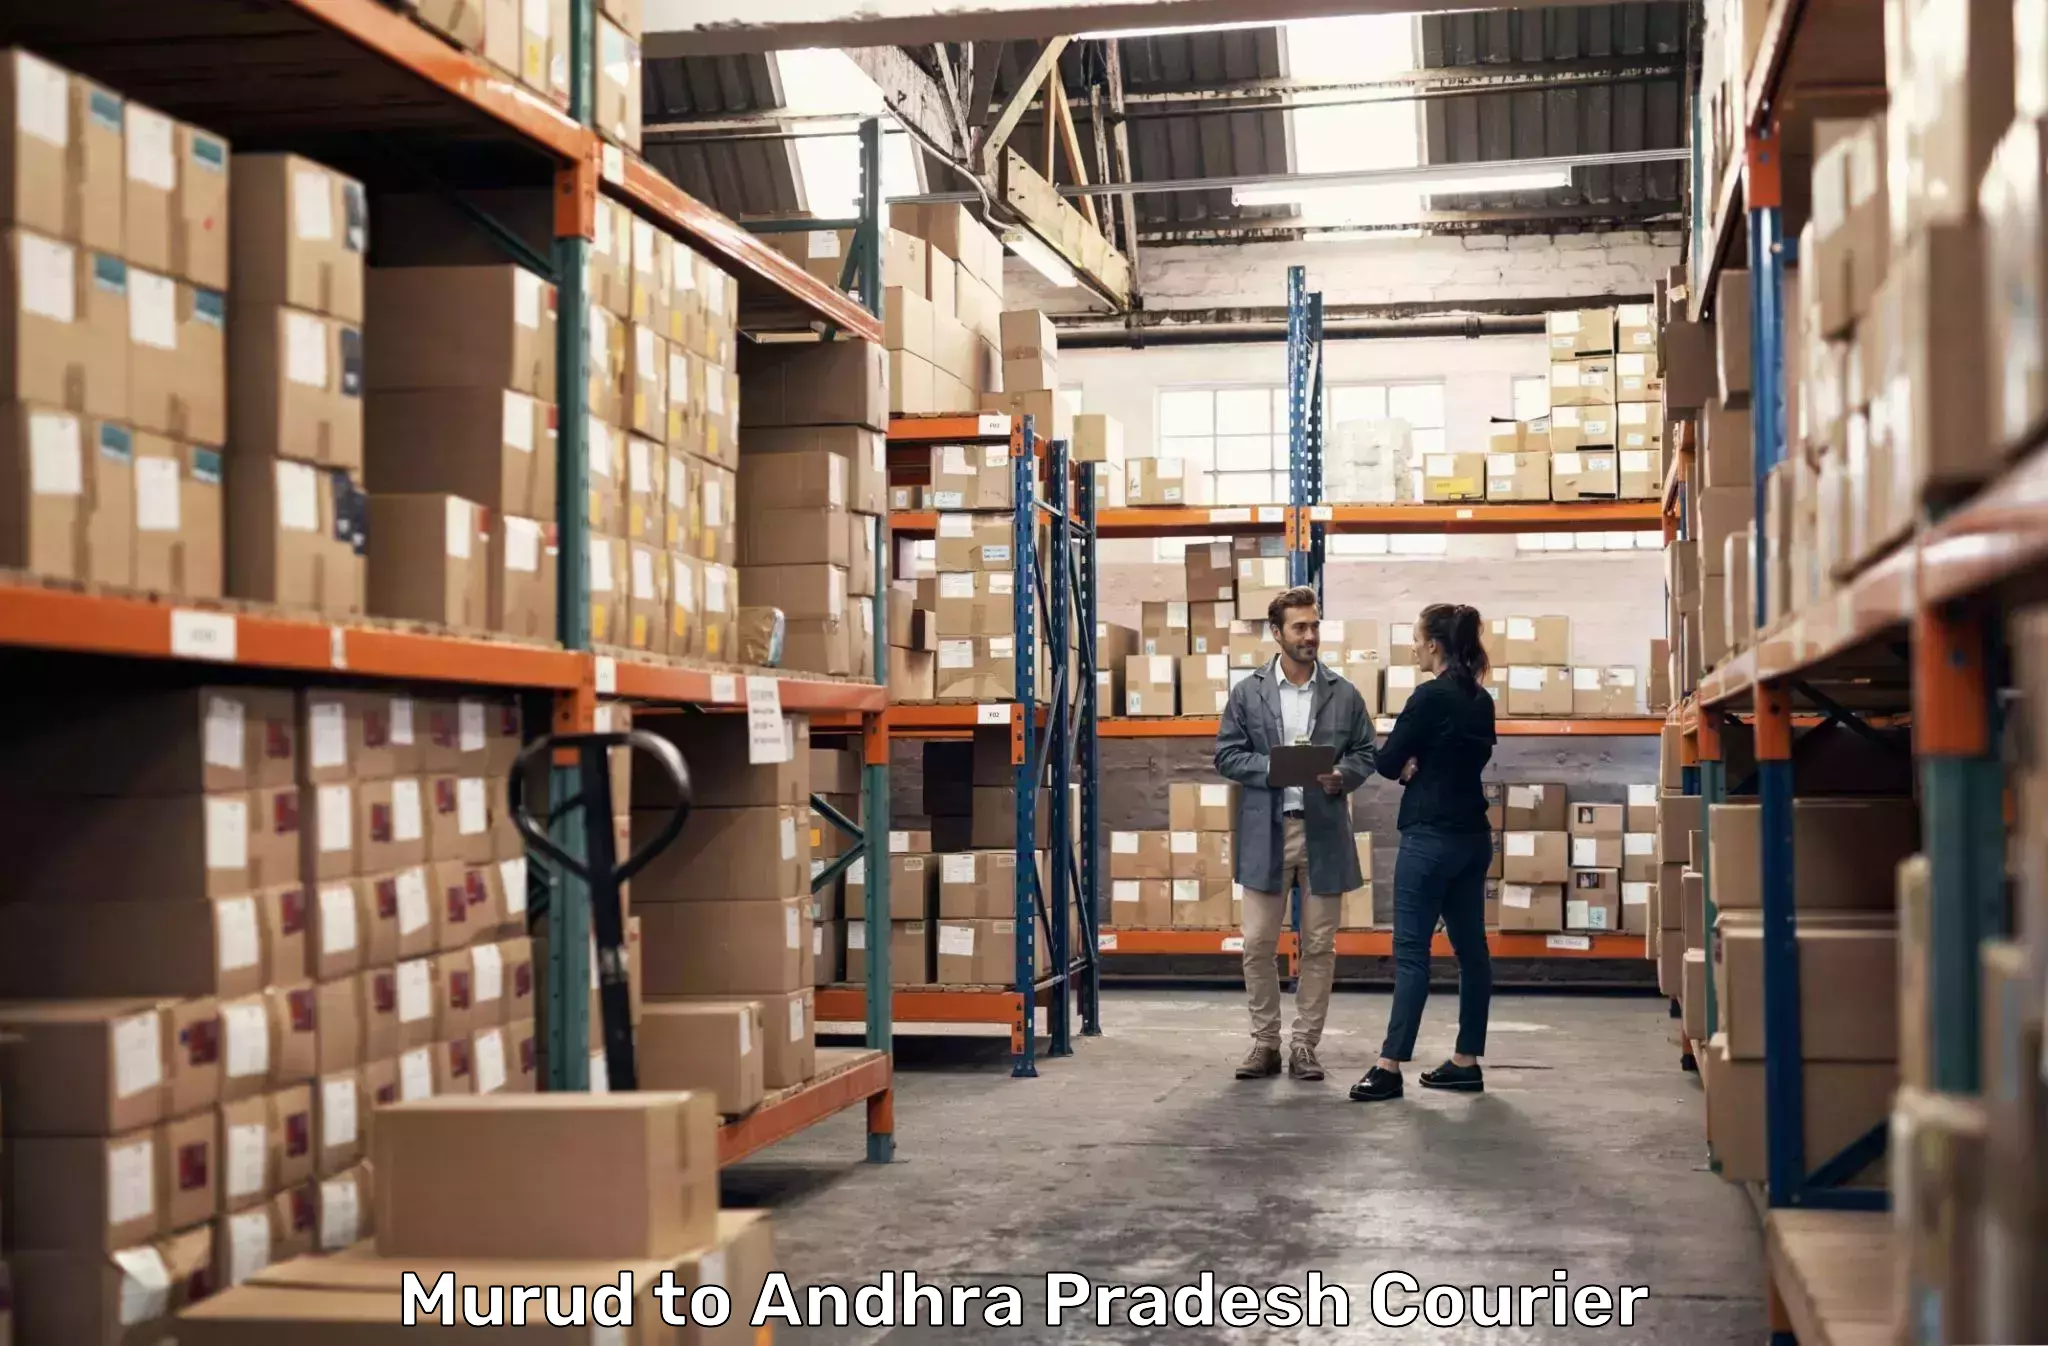 Courier service innovation Murud to Visakhapatnam Port